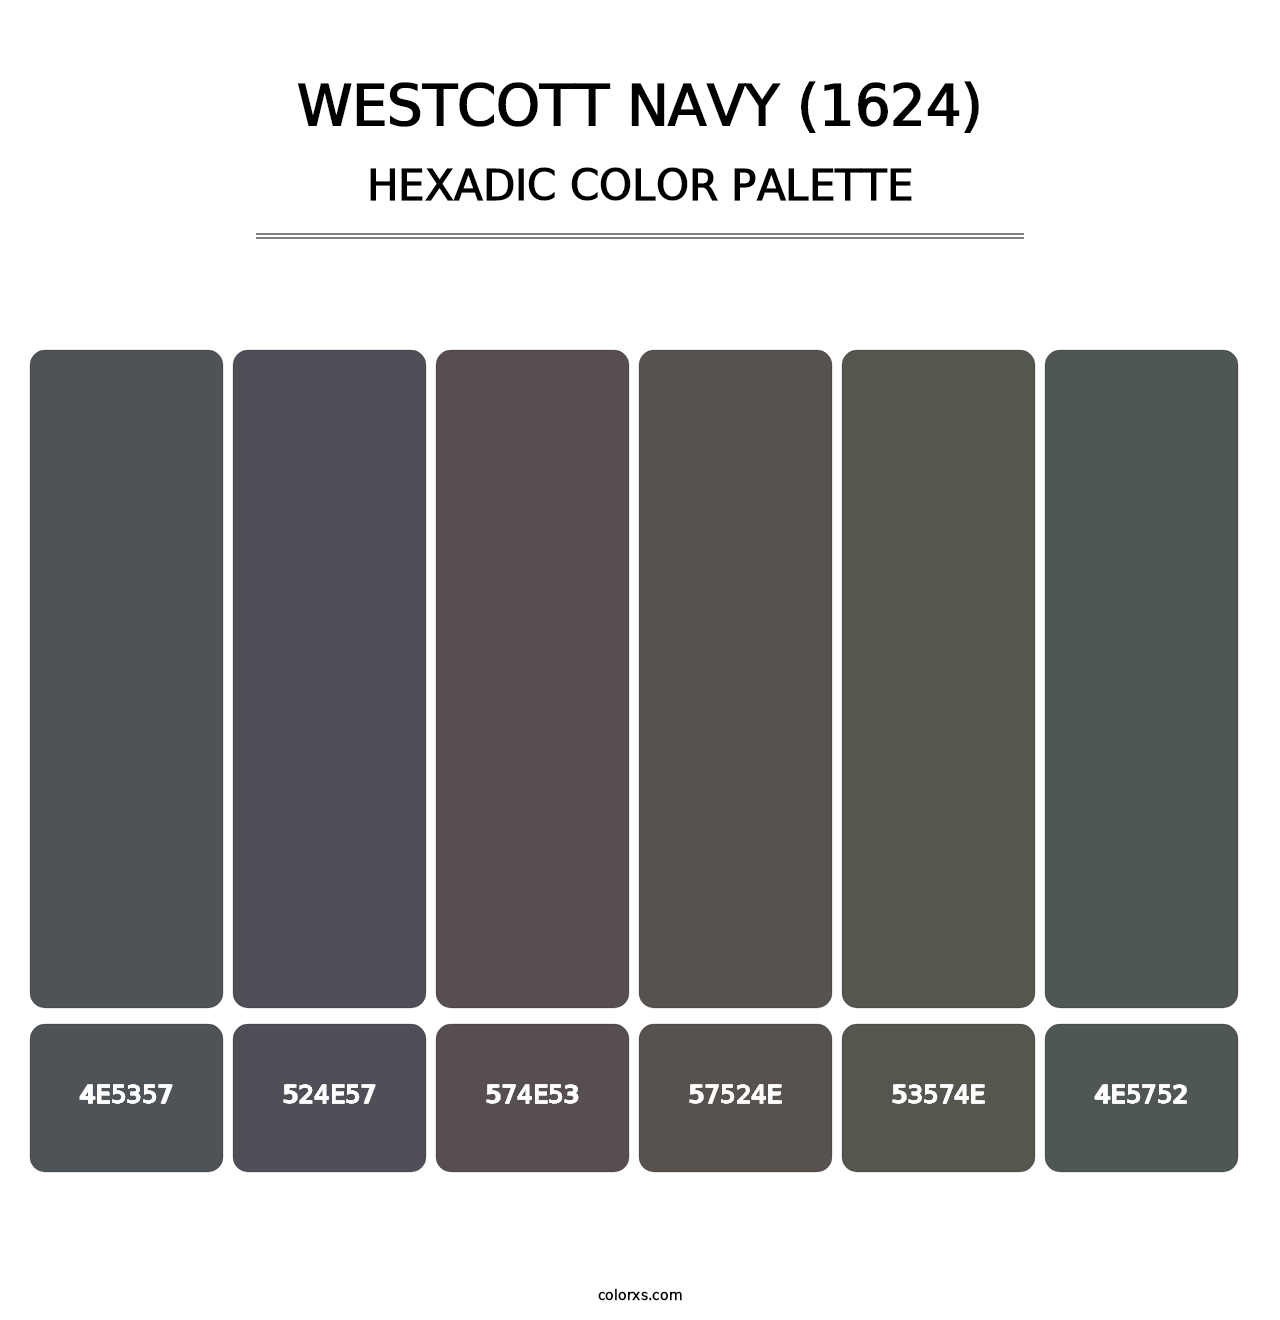 Westcott Navy (1624) - Hexadic Color Palette